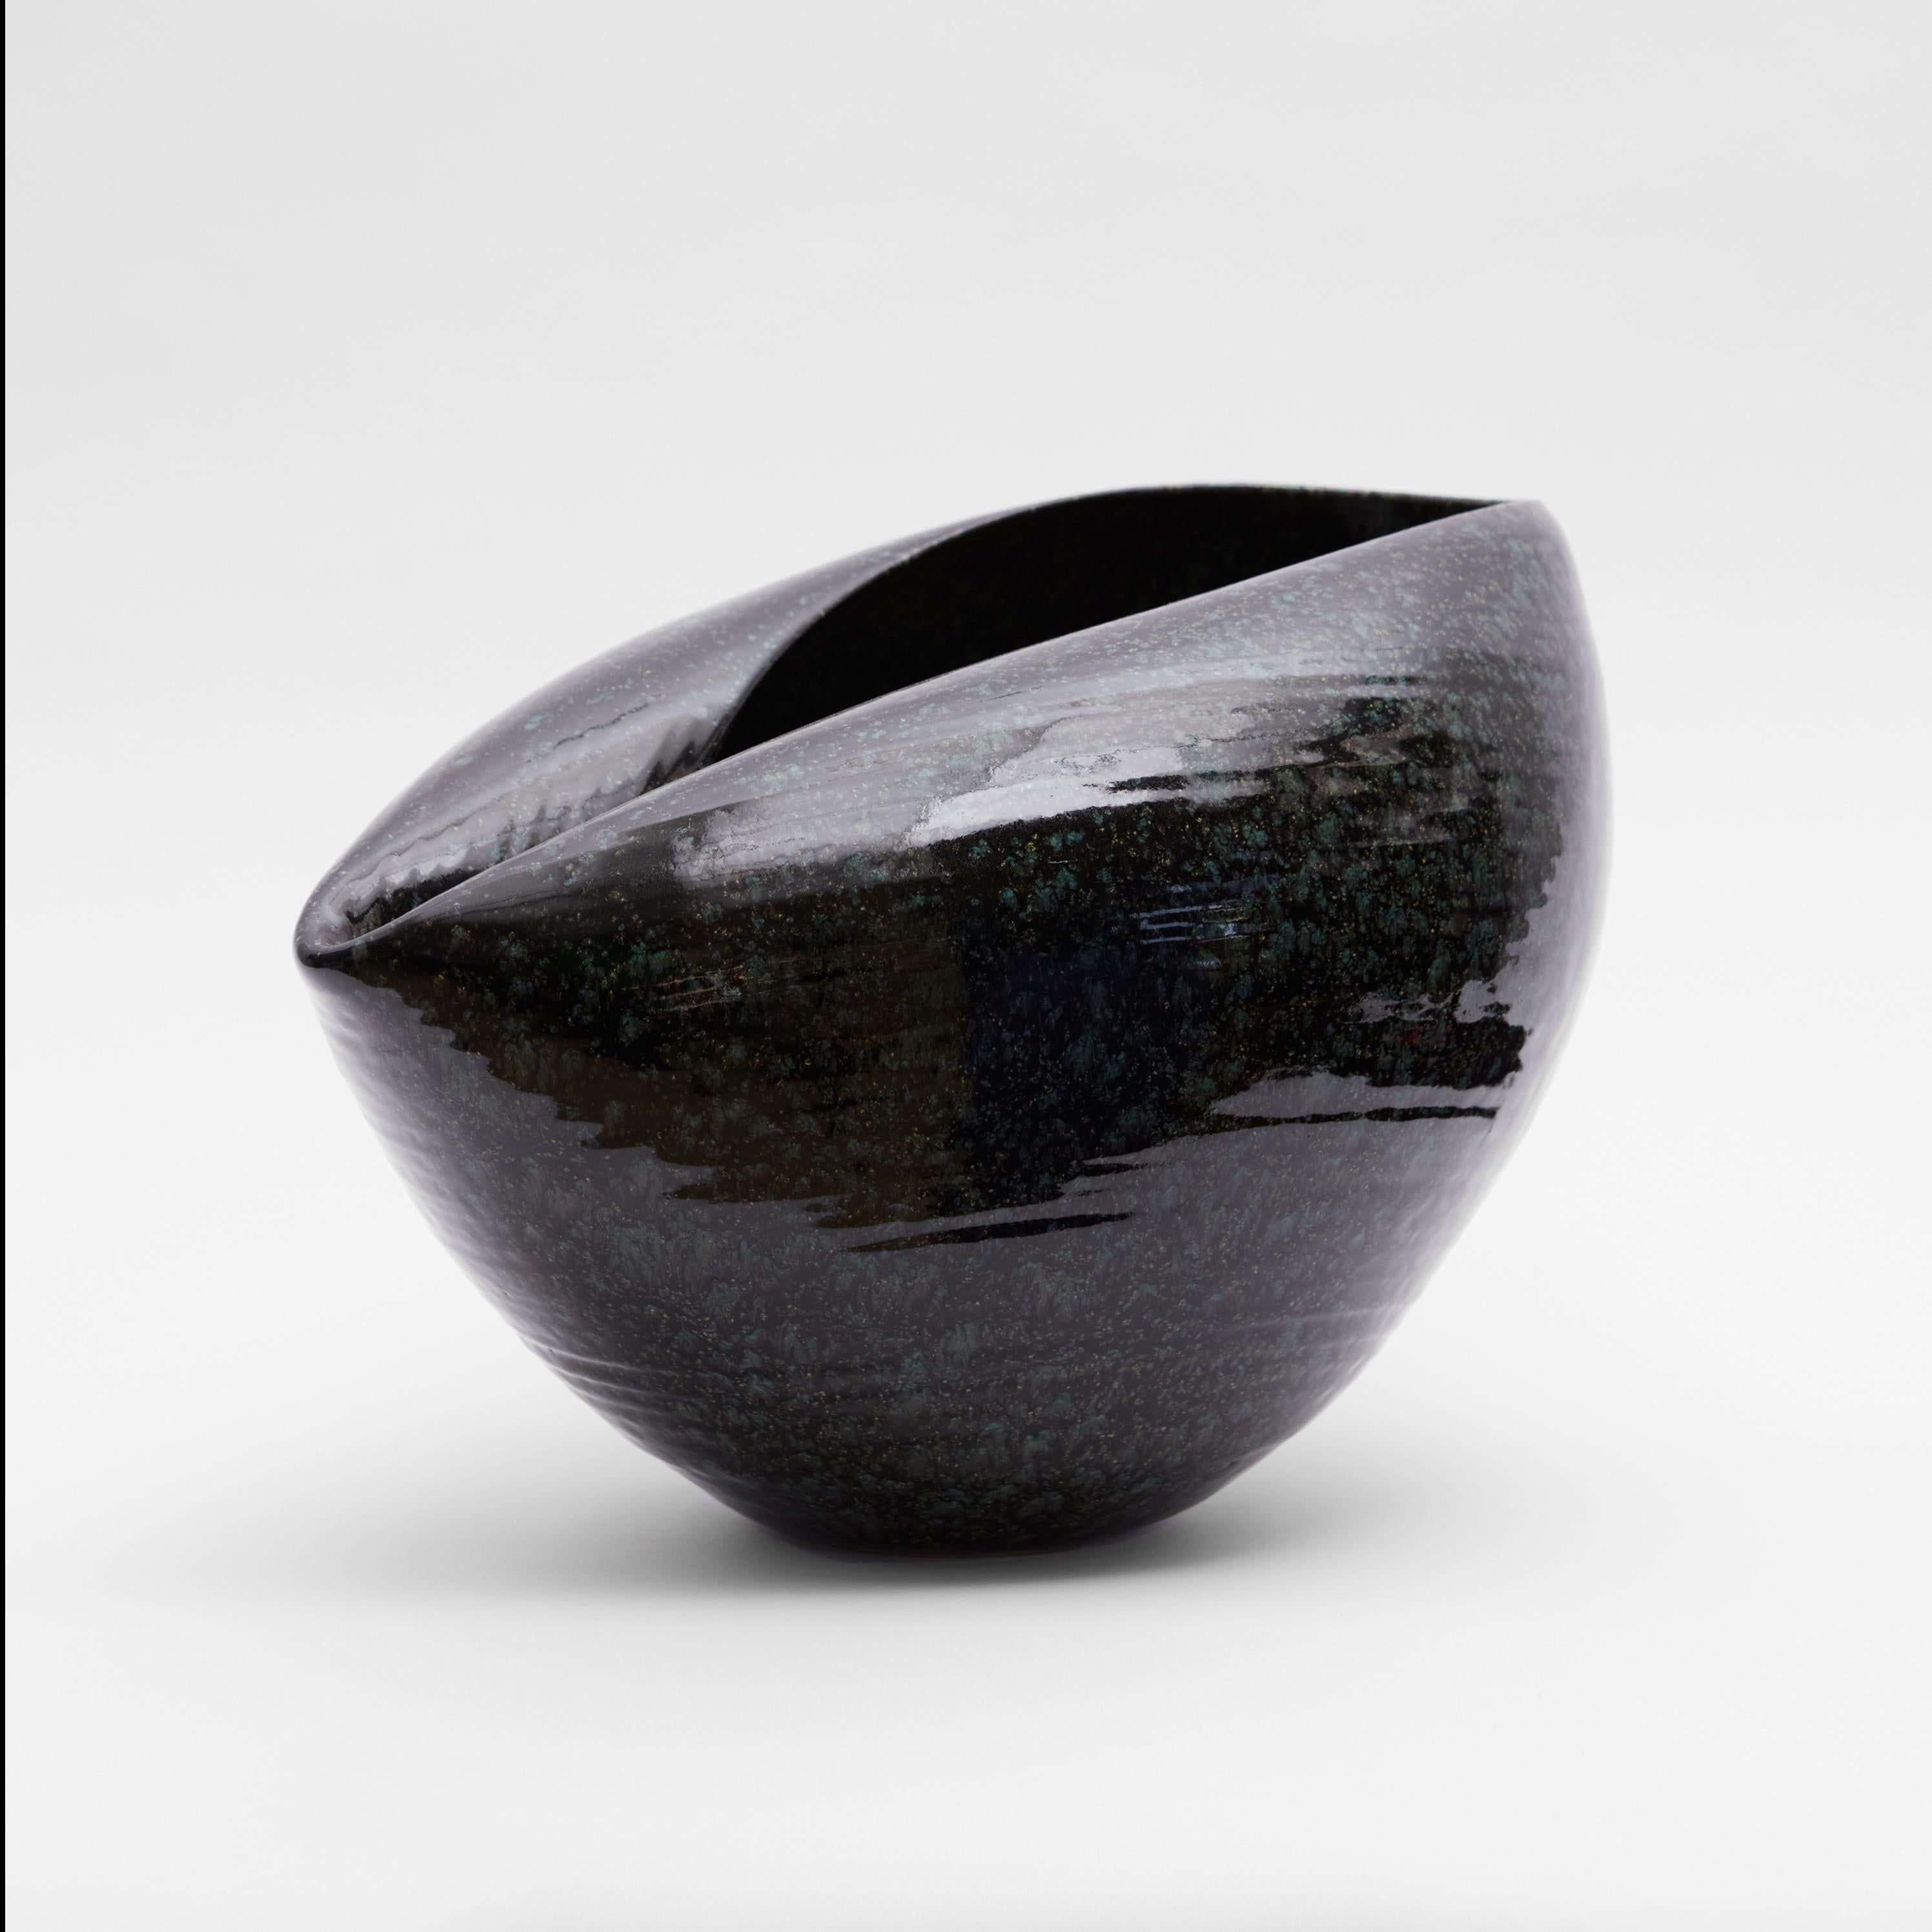 Organic Modern Medium Large Black Cosmic Oval Open Form, Vessel No.106, Ceramic Sculpture For Sale